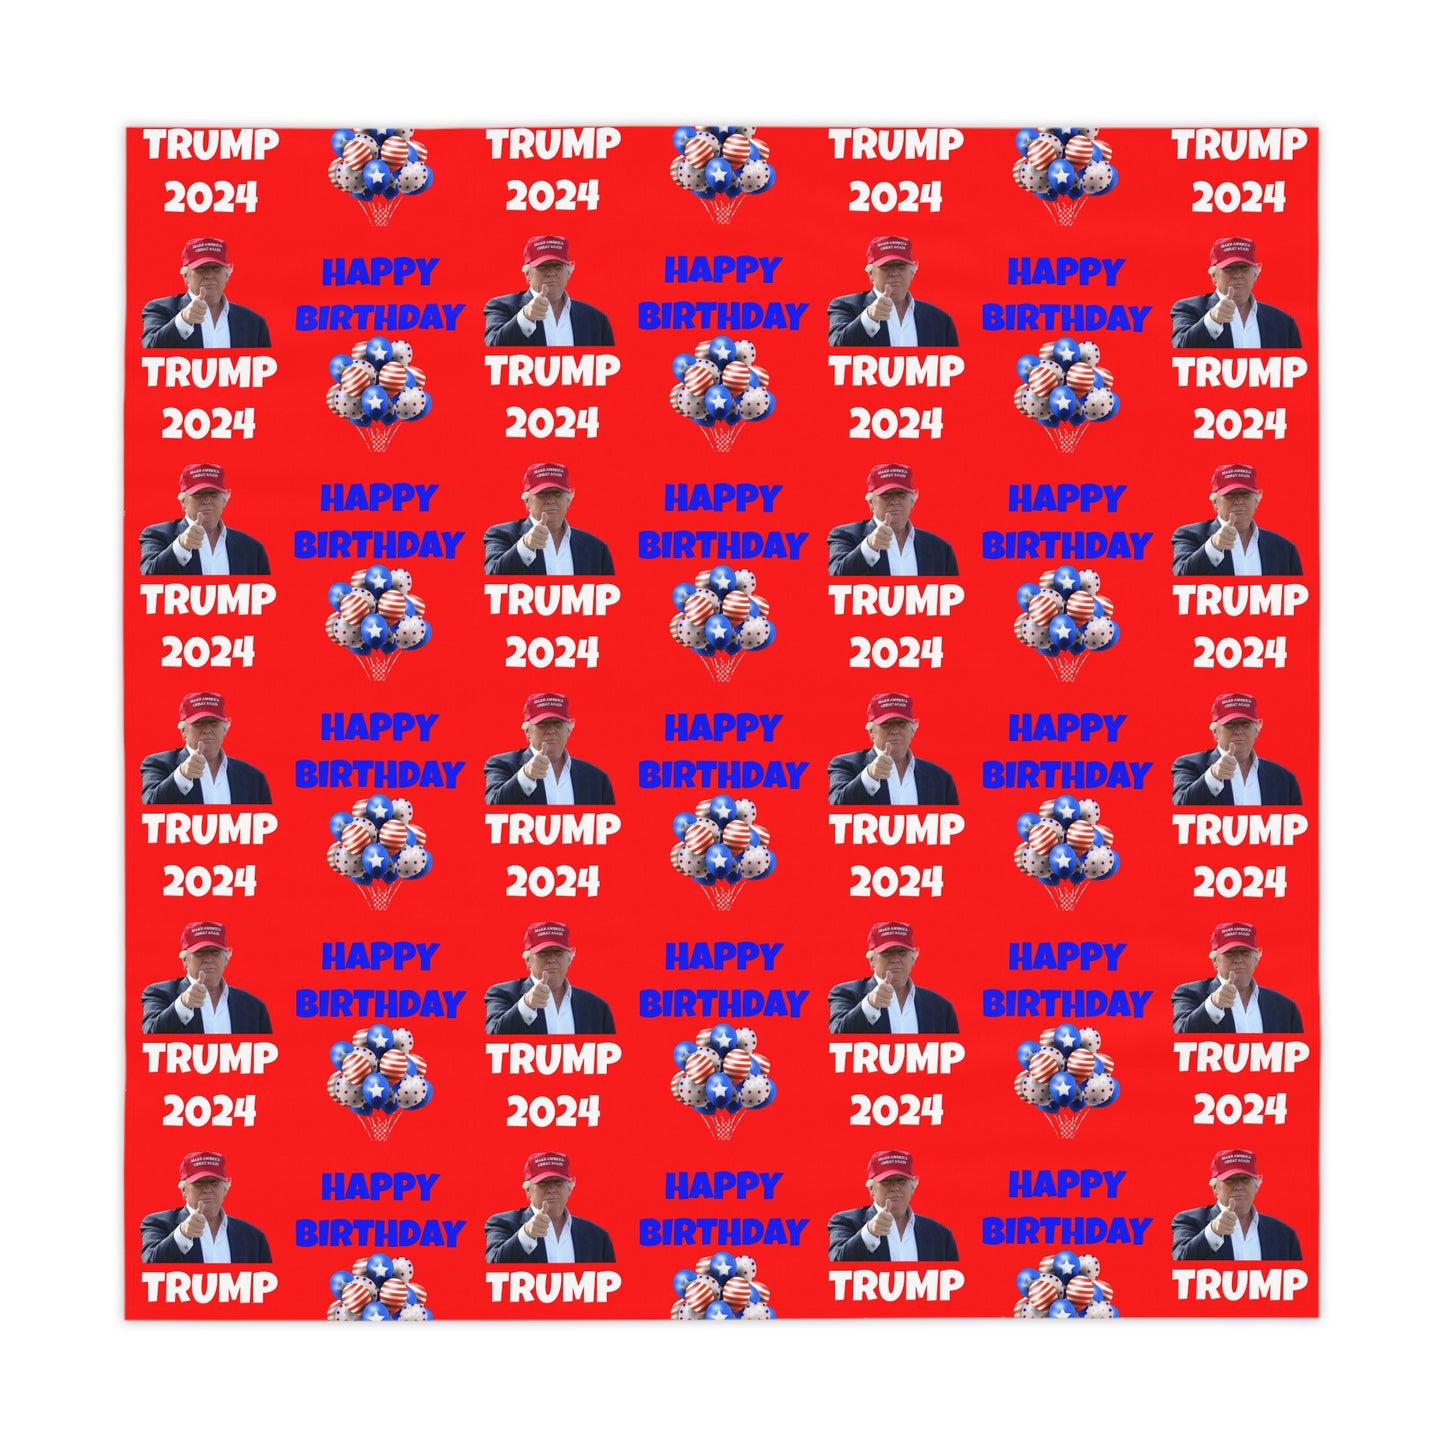 Happy Birthday Trump 2024 Red Celebration Fabric Tablecloth